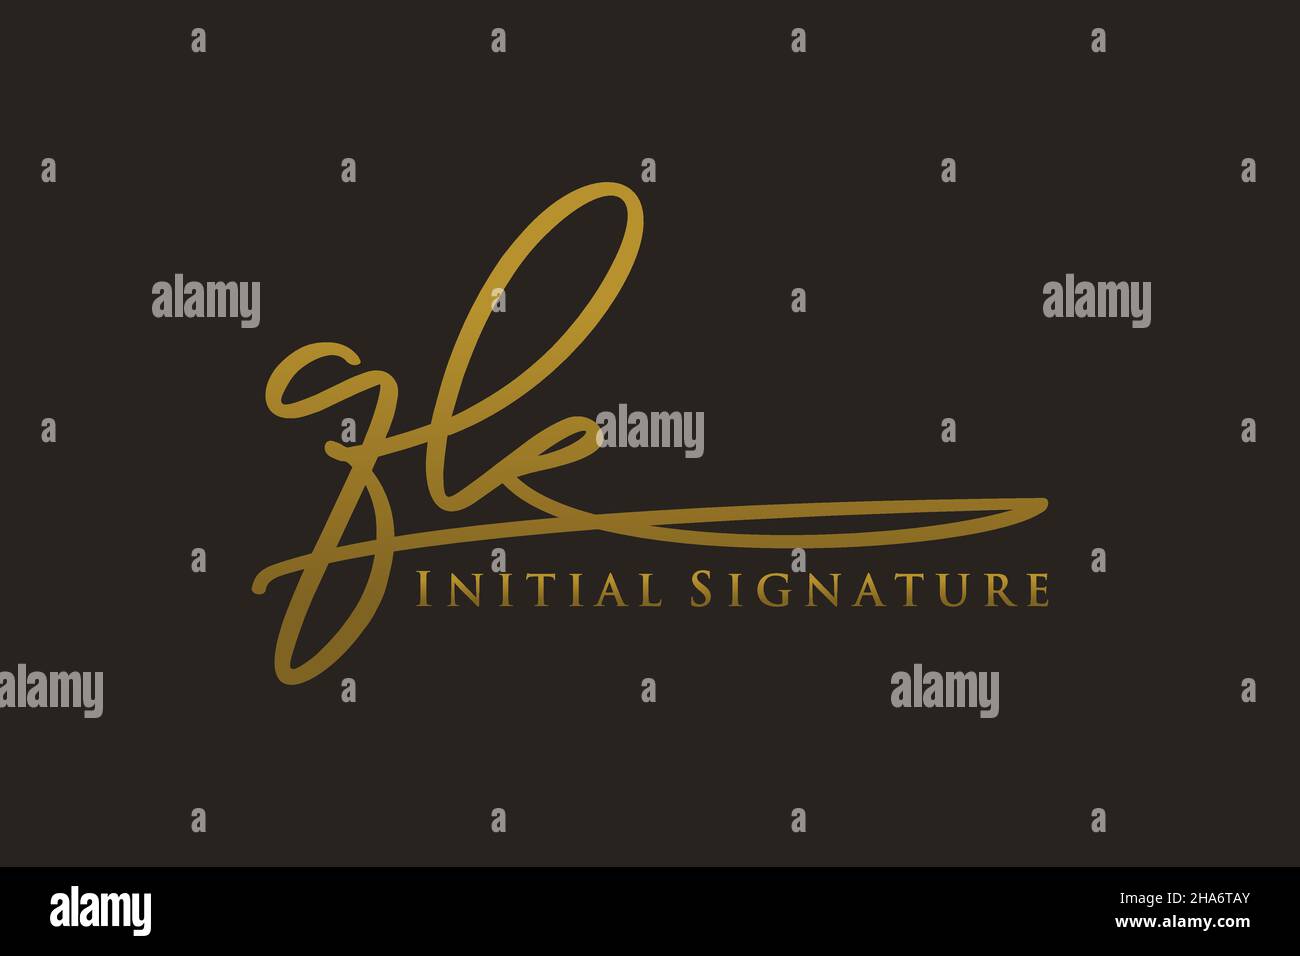 QK Letter Signature Logo Template elegant design logo. Hand drawn Calligraphy lettering Vector illustration. Stock Vector